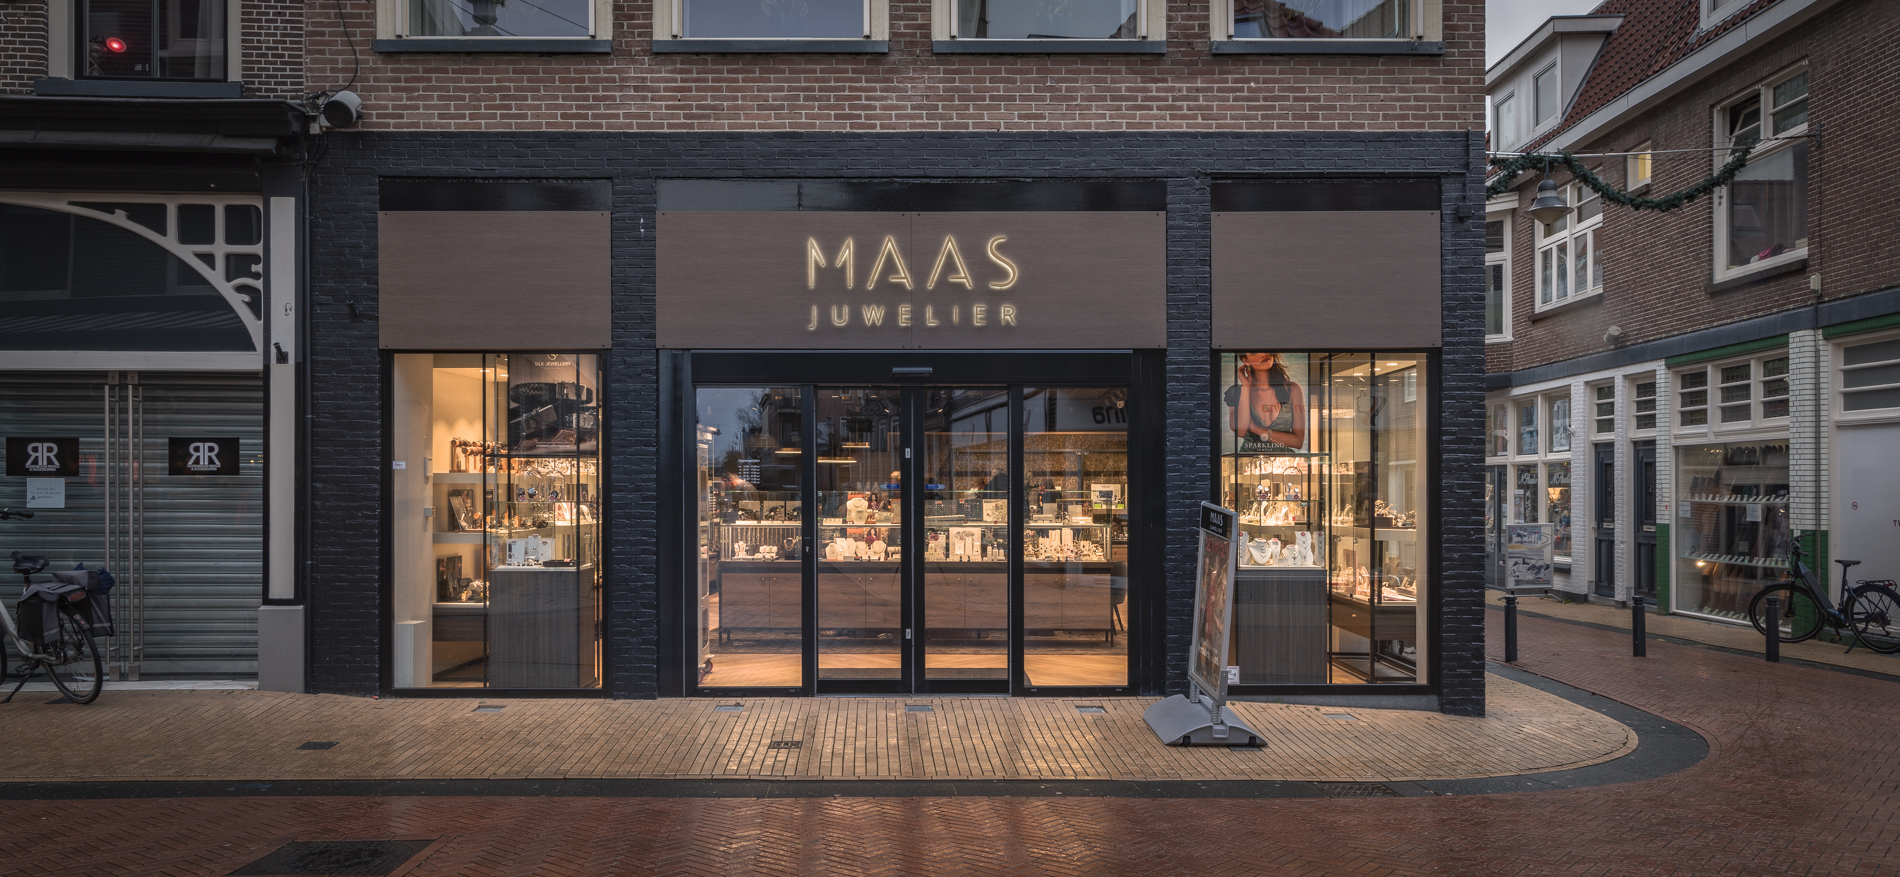 Juwelier Maas | Steenwijk - Juweliers